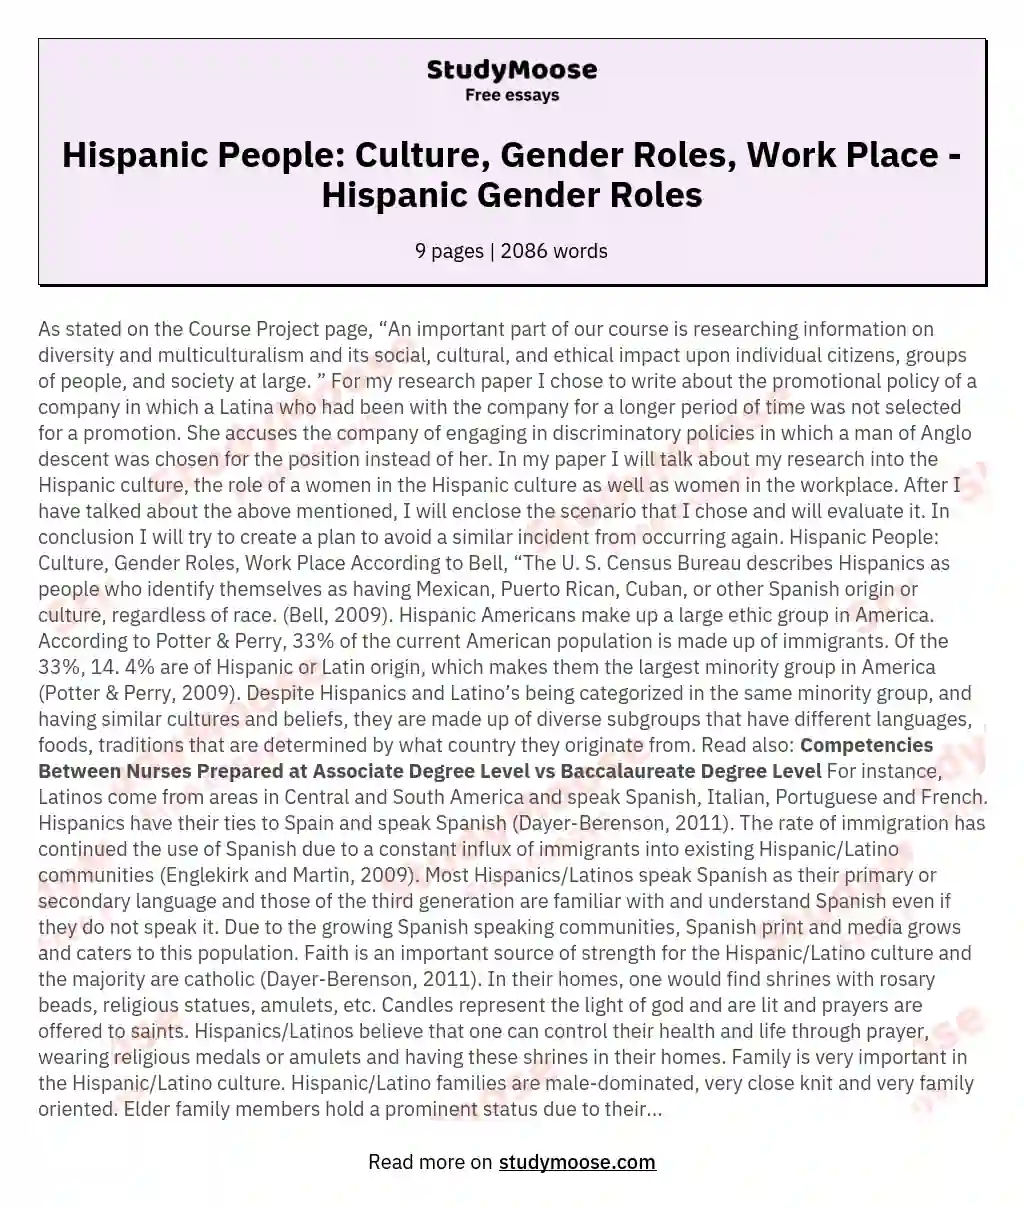 Hispanic People: Culture, Gender Roles, Work Place - Hispanic Gender Roles